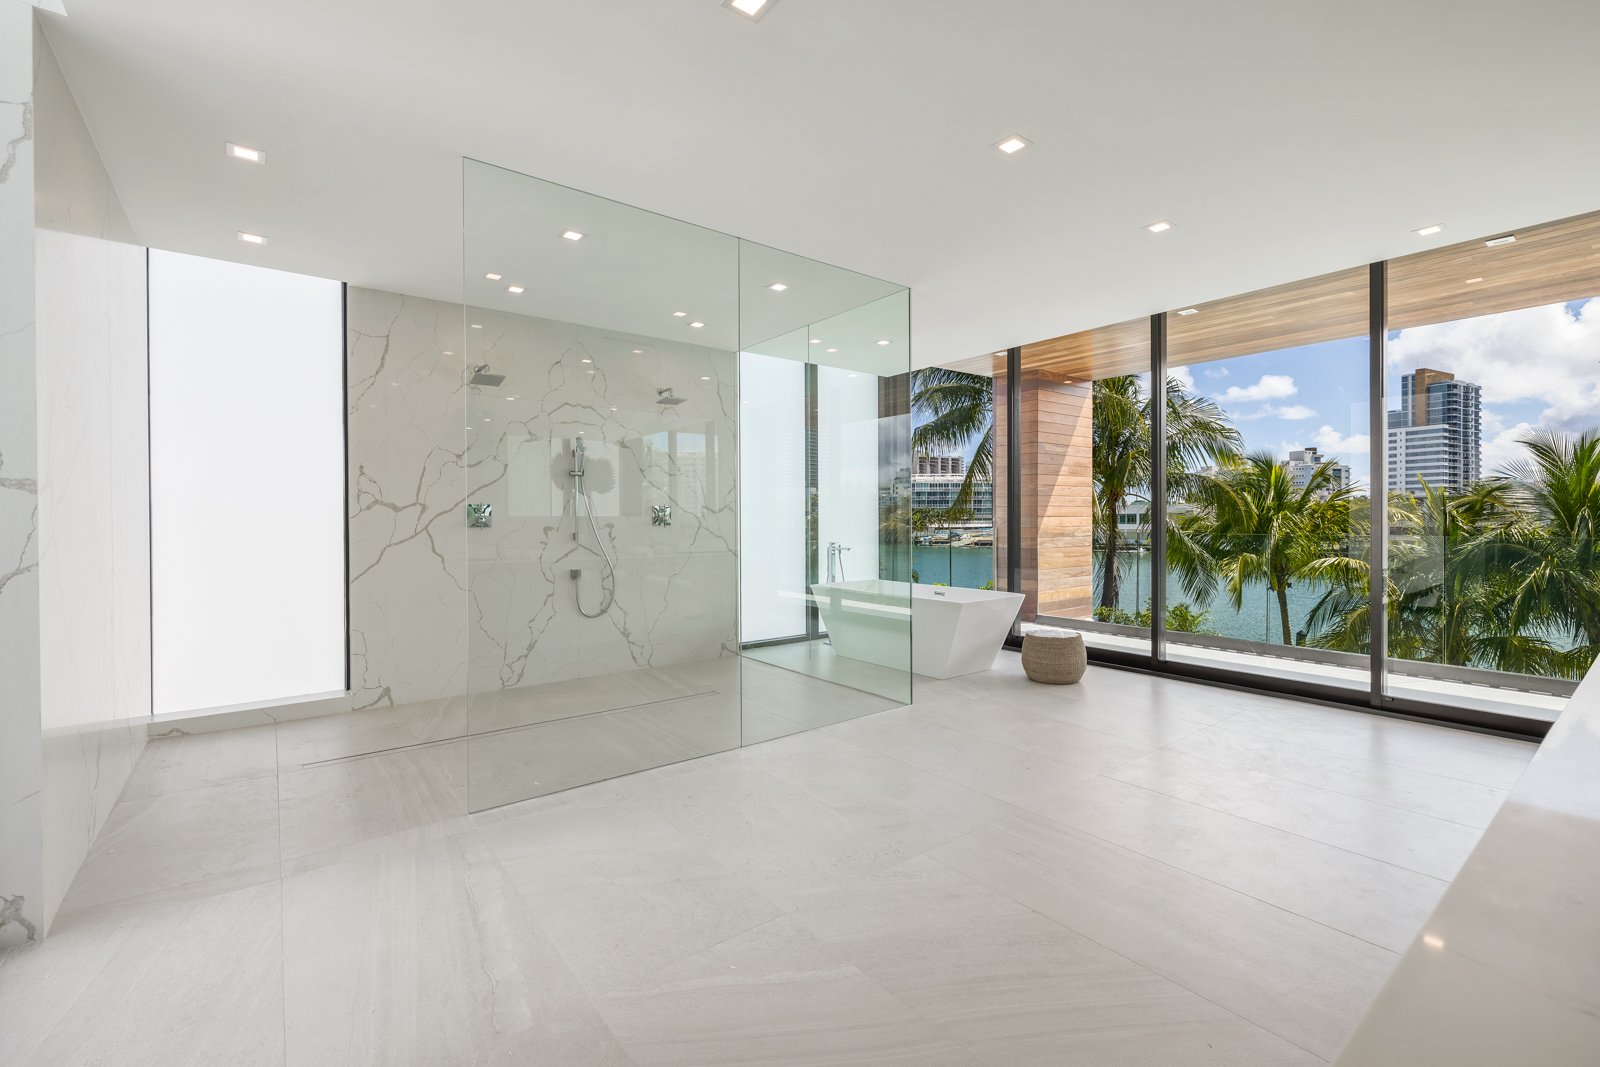 Grammy Award-Winning Rapper Future Buys Allison Island Home For $16.3 Million On Miami Beach 12.jpg